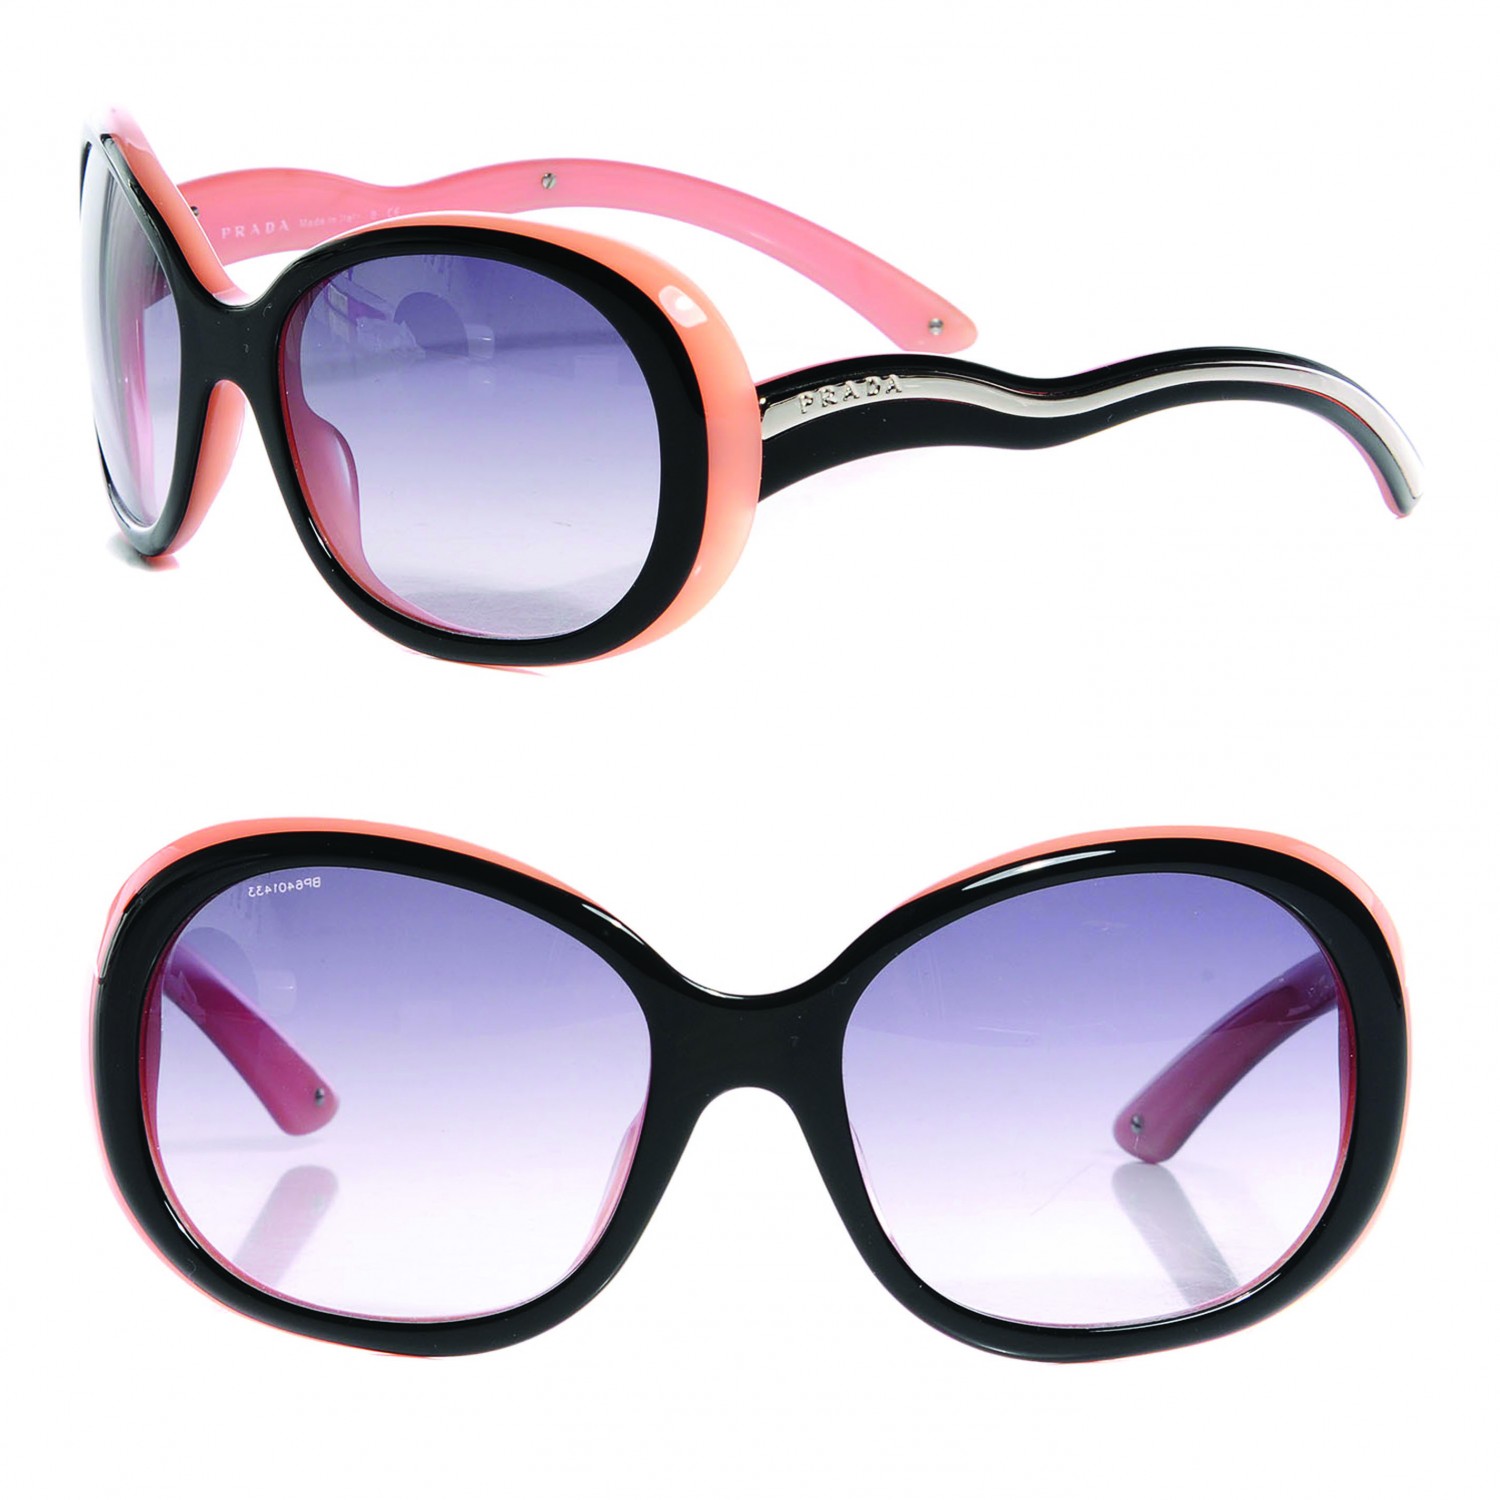 prada sunglasses with pink arms